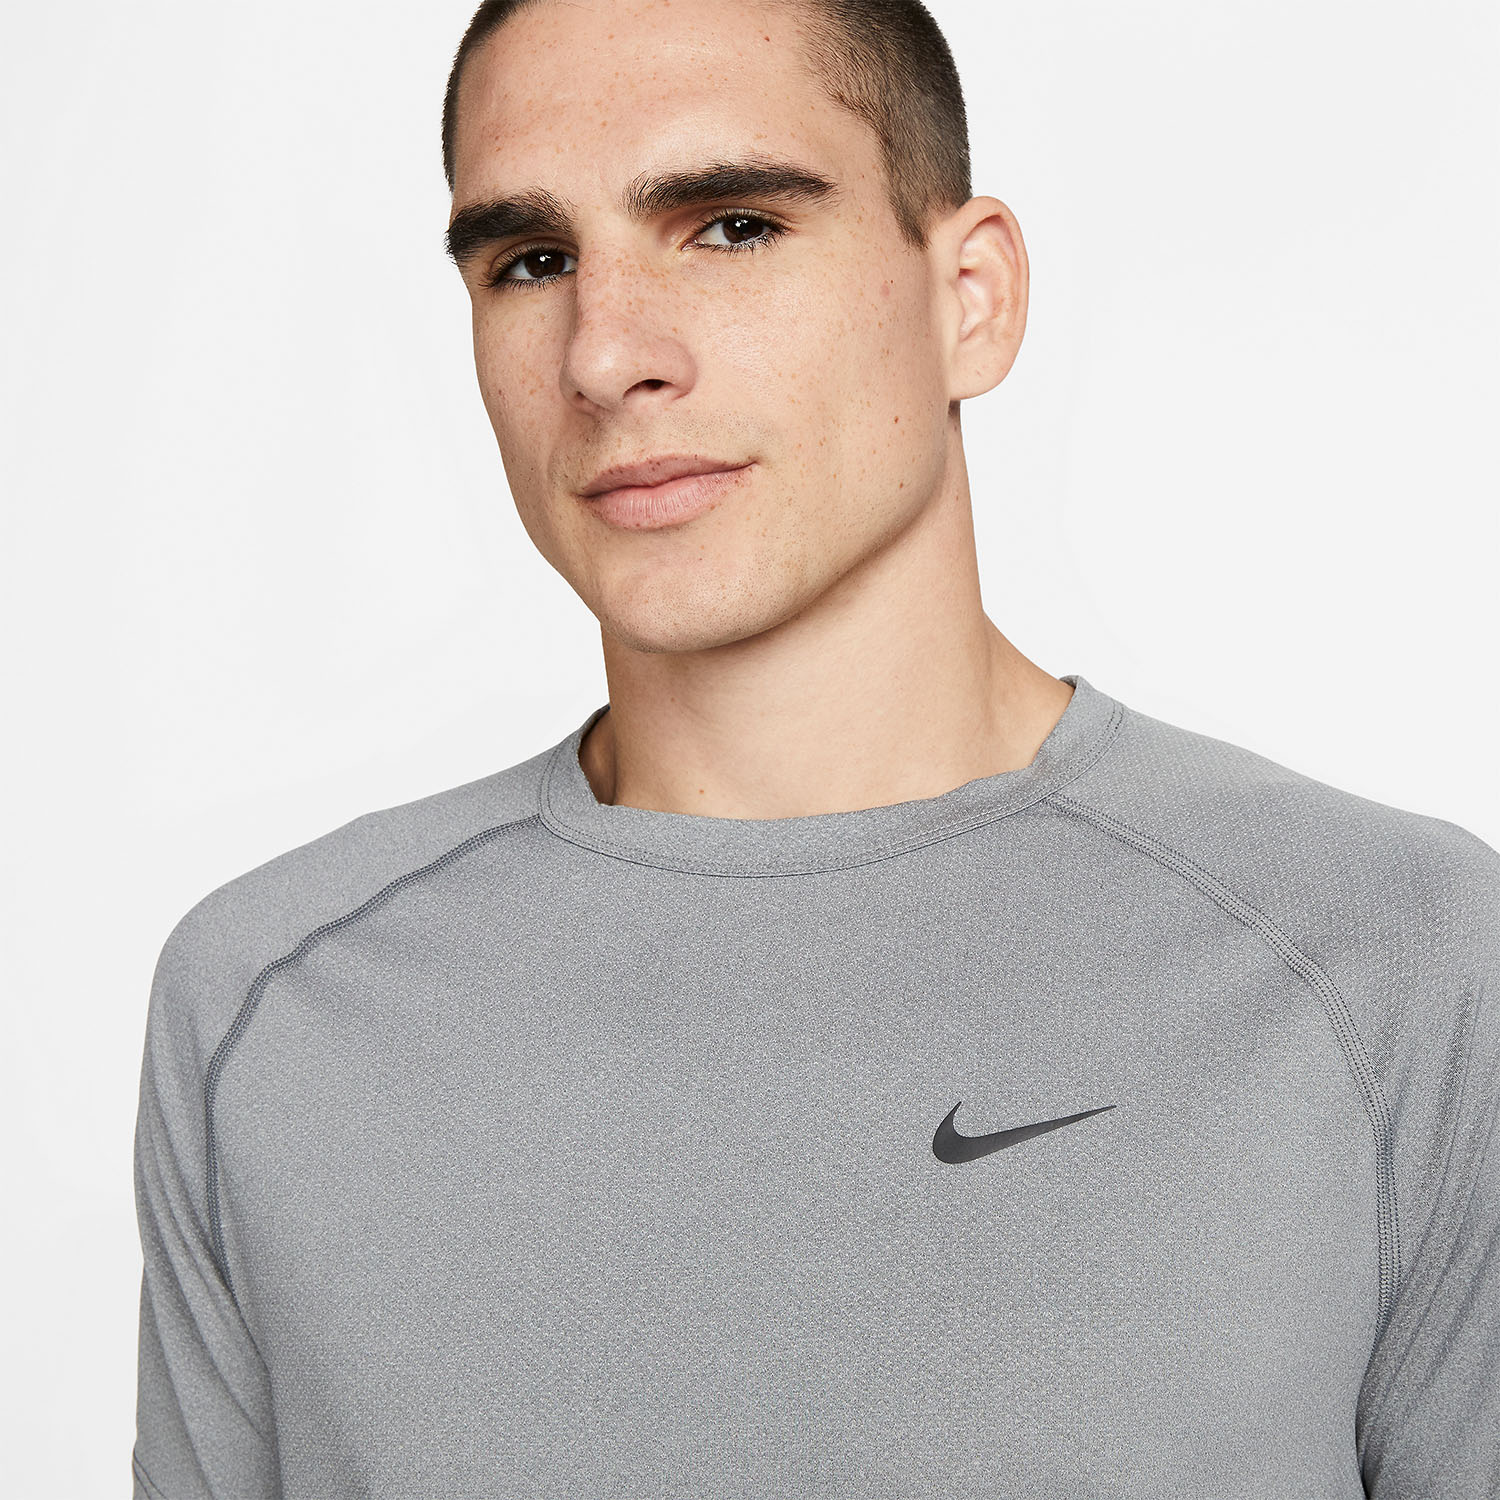 Nike Dri-FIT Ready Men's Training T-Shirt - Smoke Gray/Heater